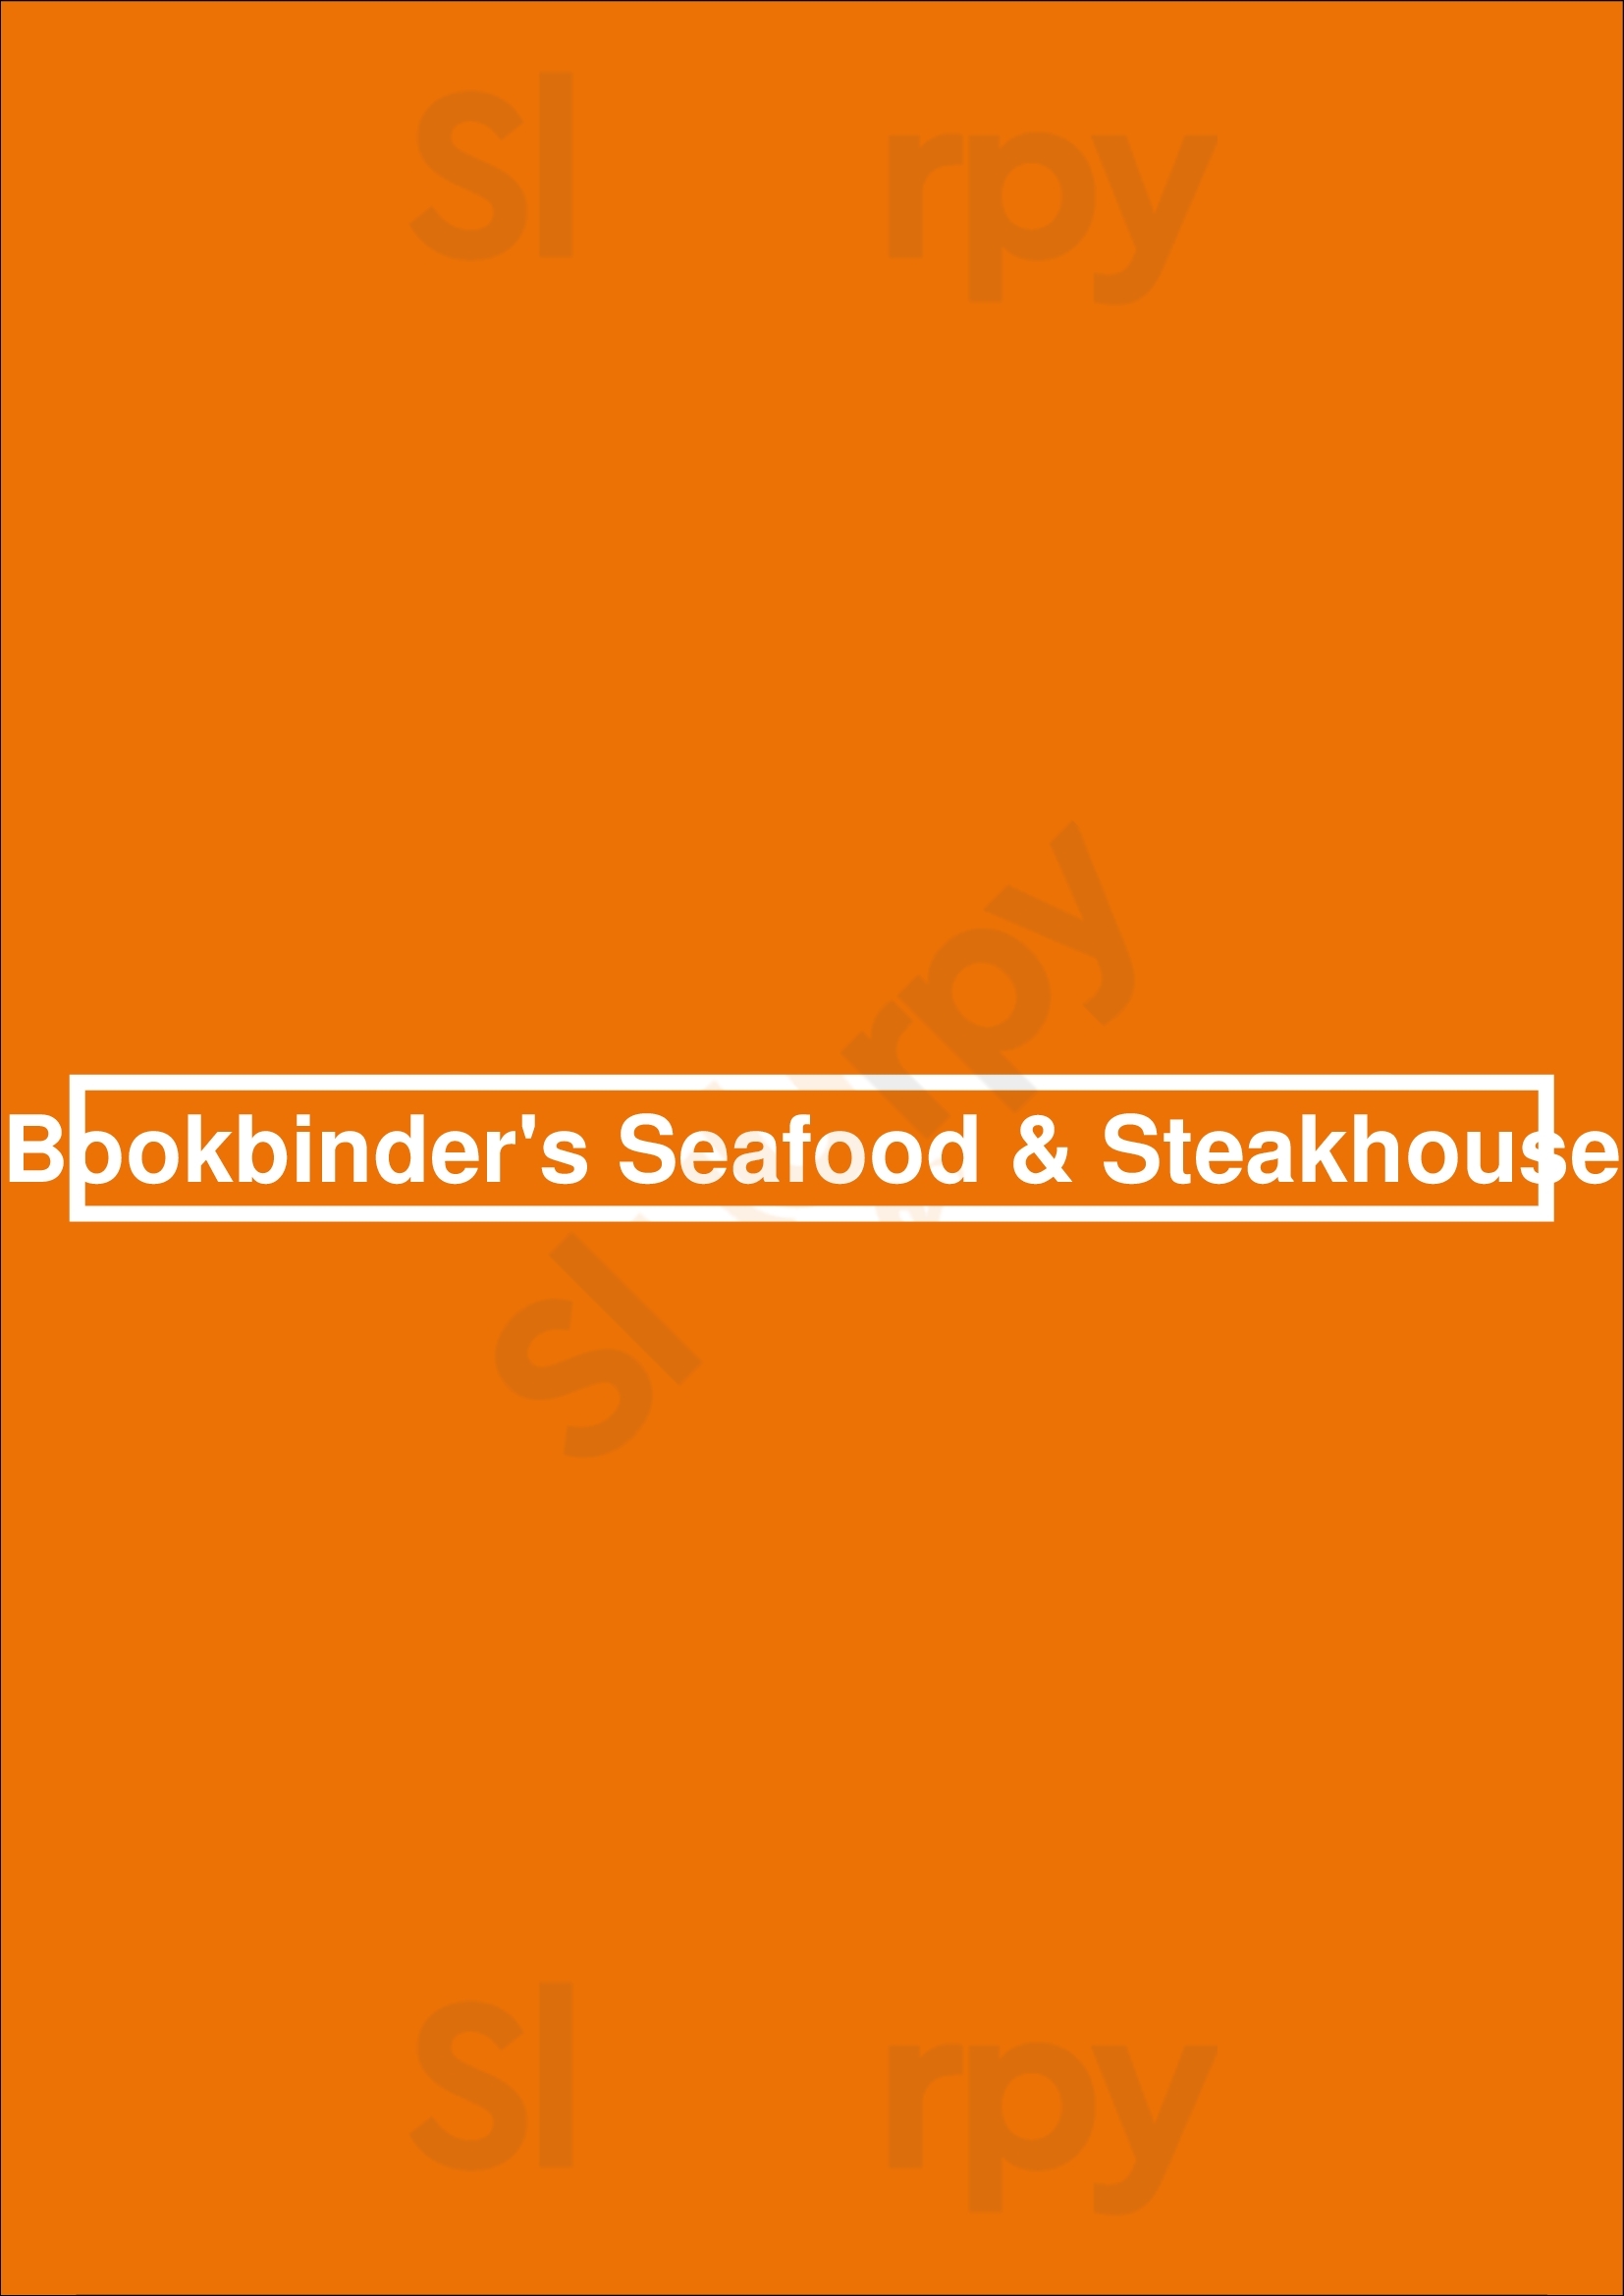 Bookbinder's Seafood & Steakhouse Richmond Menu - 1